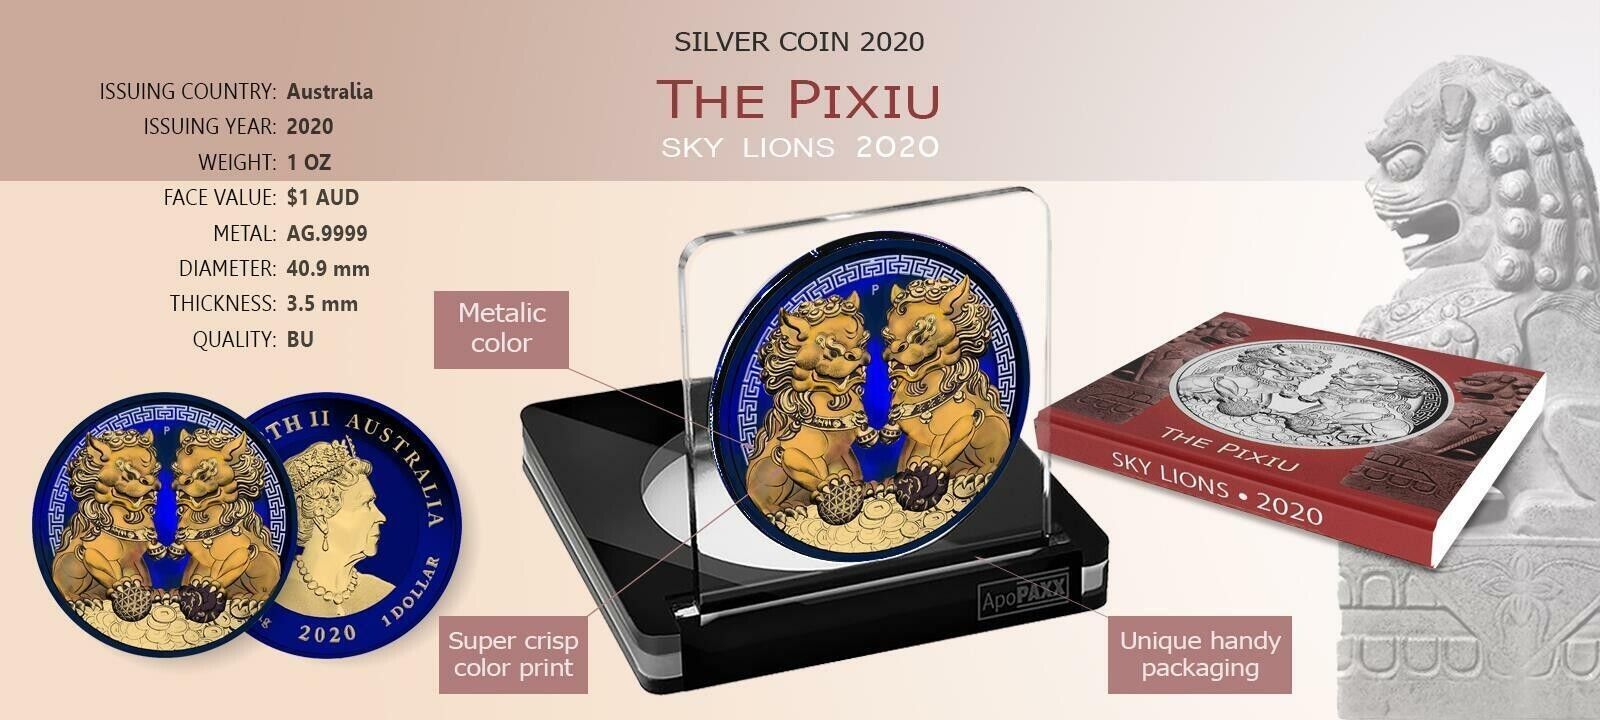 1 Oz Silver Coin 2020 $1 Australia Guardian Sky Lions Pixiu - Space Blue Gilded-classypw.com-4